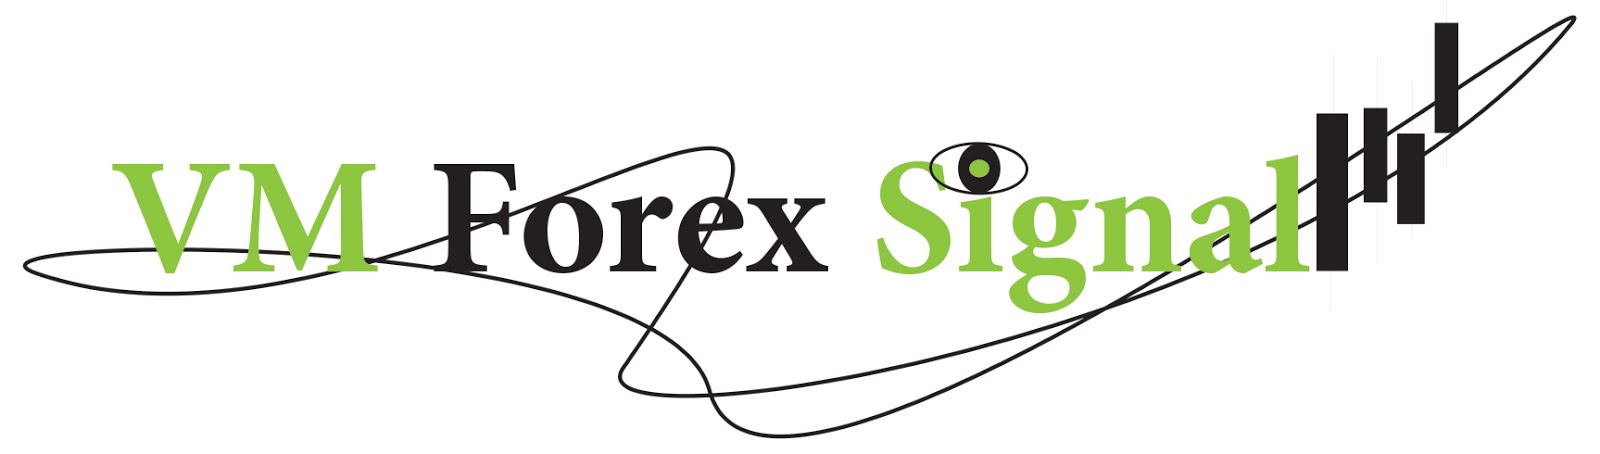 VM Forex Signal